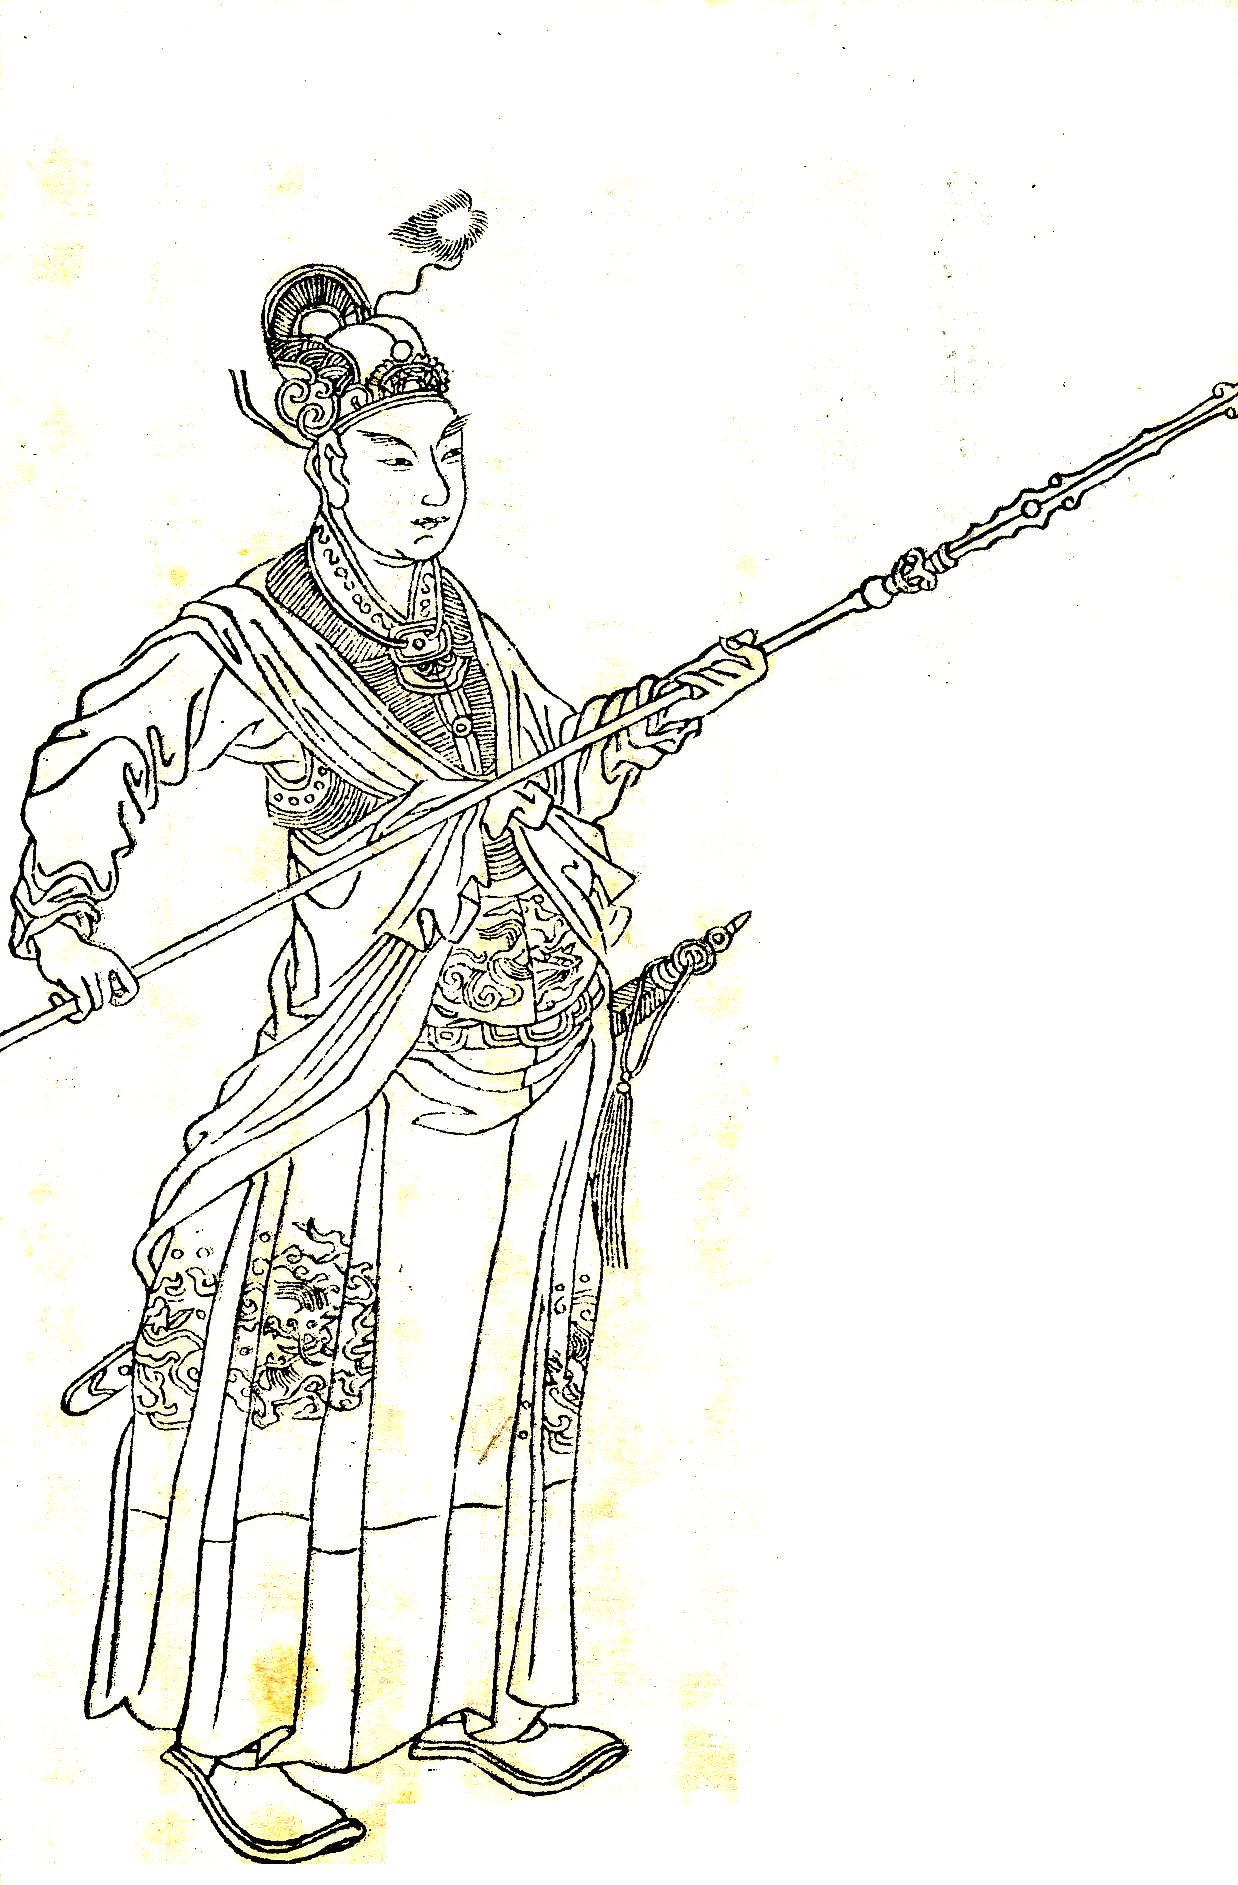 Hán Xìn pic from wikimedia commons. Public Domain.